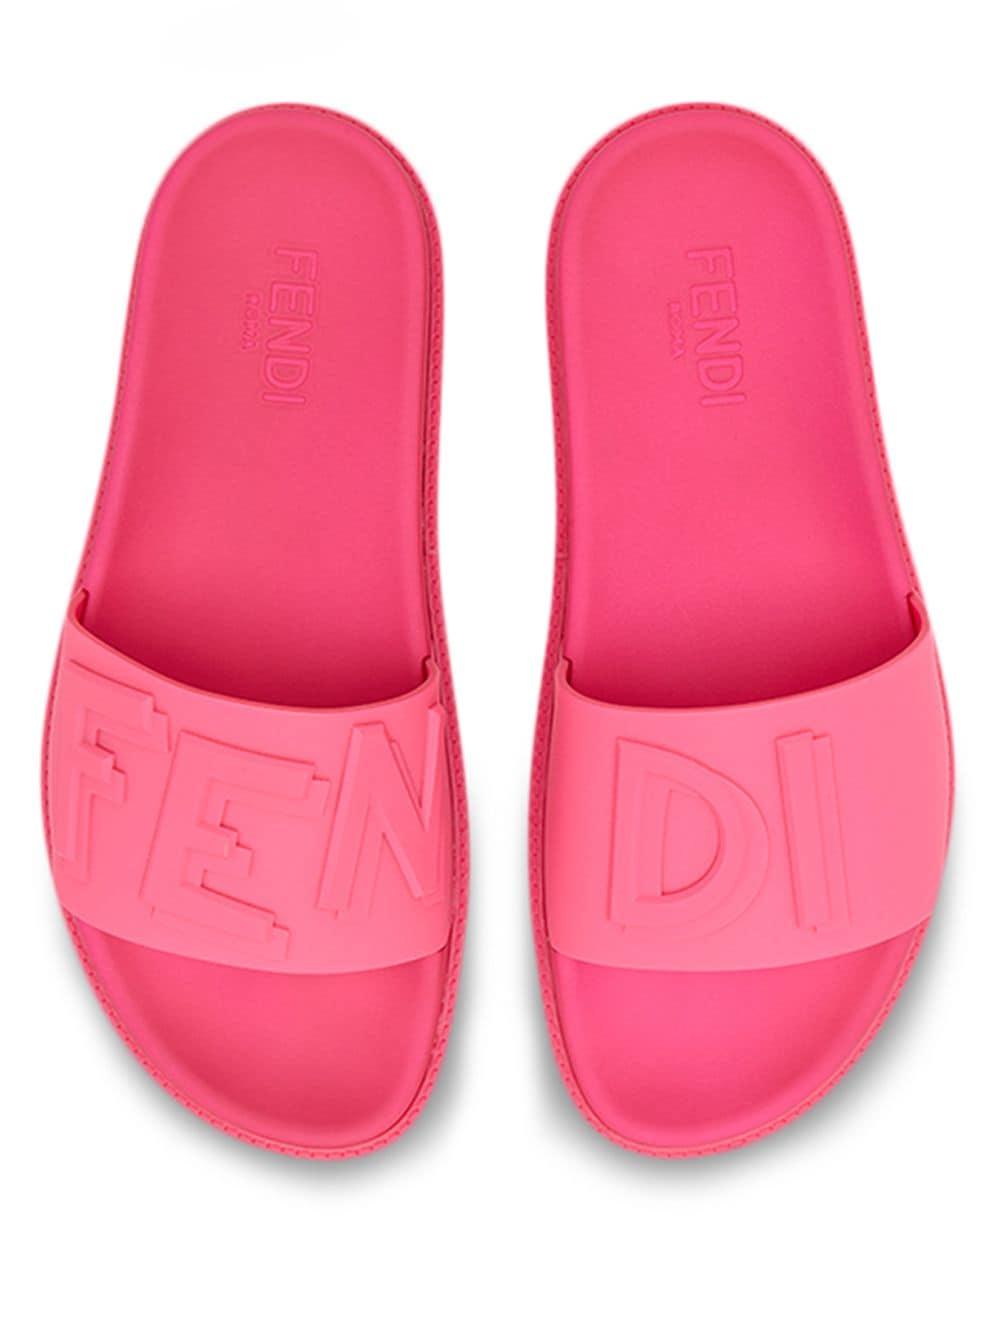 fendi slides pink